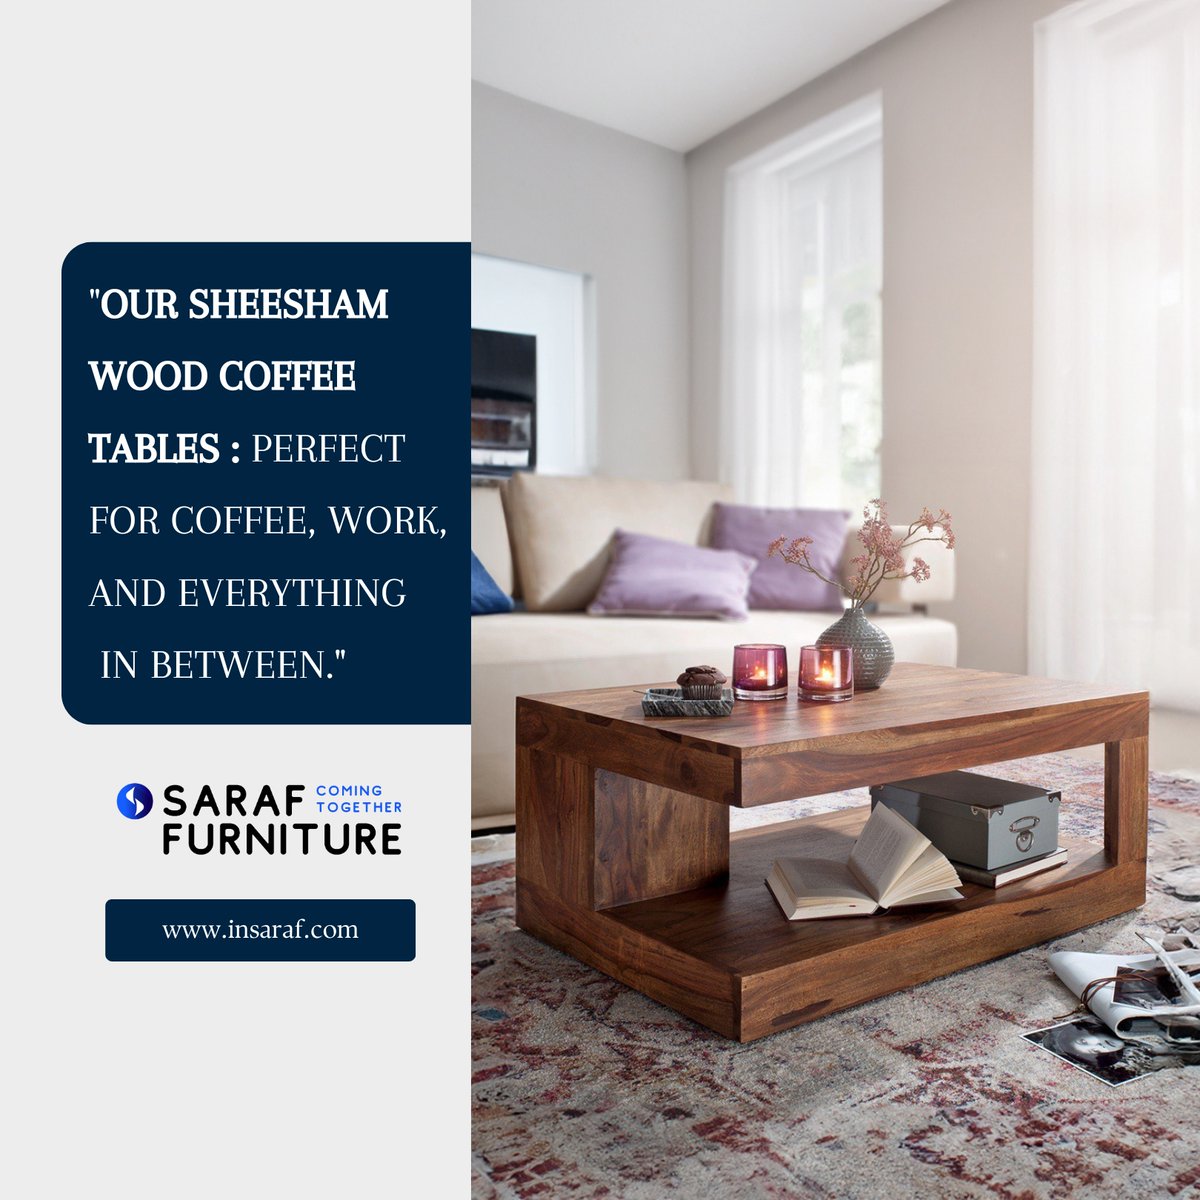 'Coffee tastes better with Sheesham wood ☕ #TakeABreak'
#CoffeeTable #SheeshamWood #SarafFurniture #HomeDeco